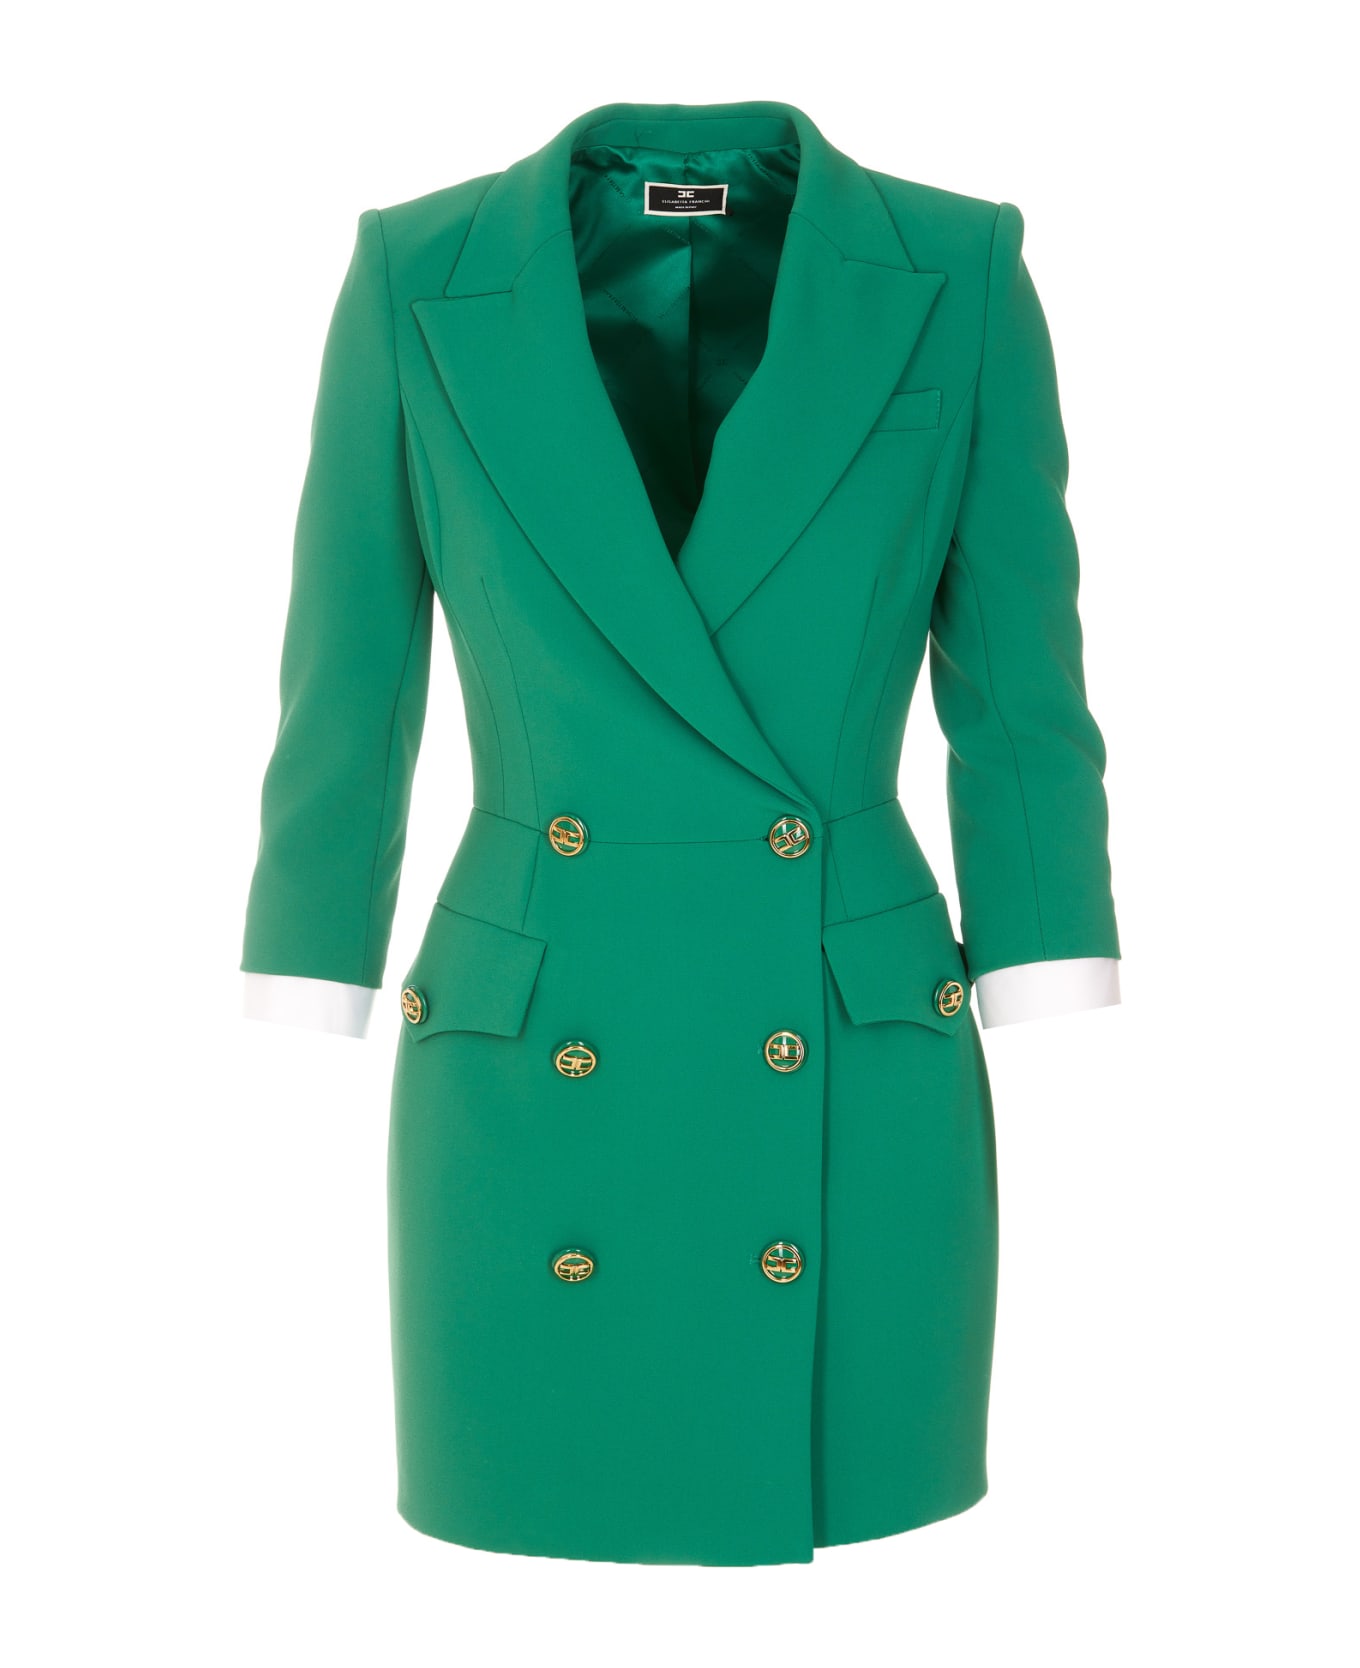 Elisabetta Franchi Blazer Dress - Verde smeraldo